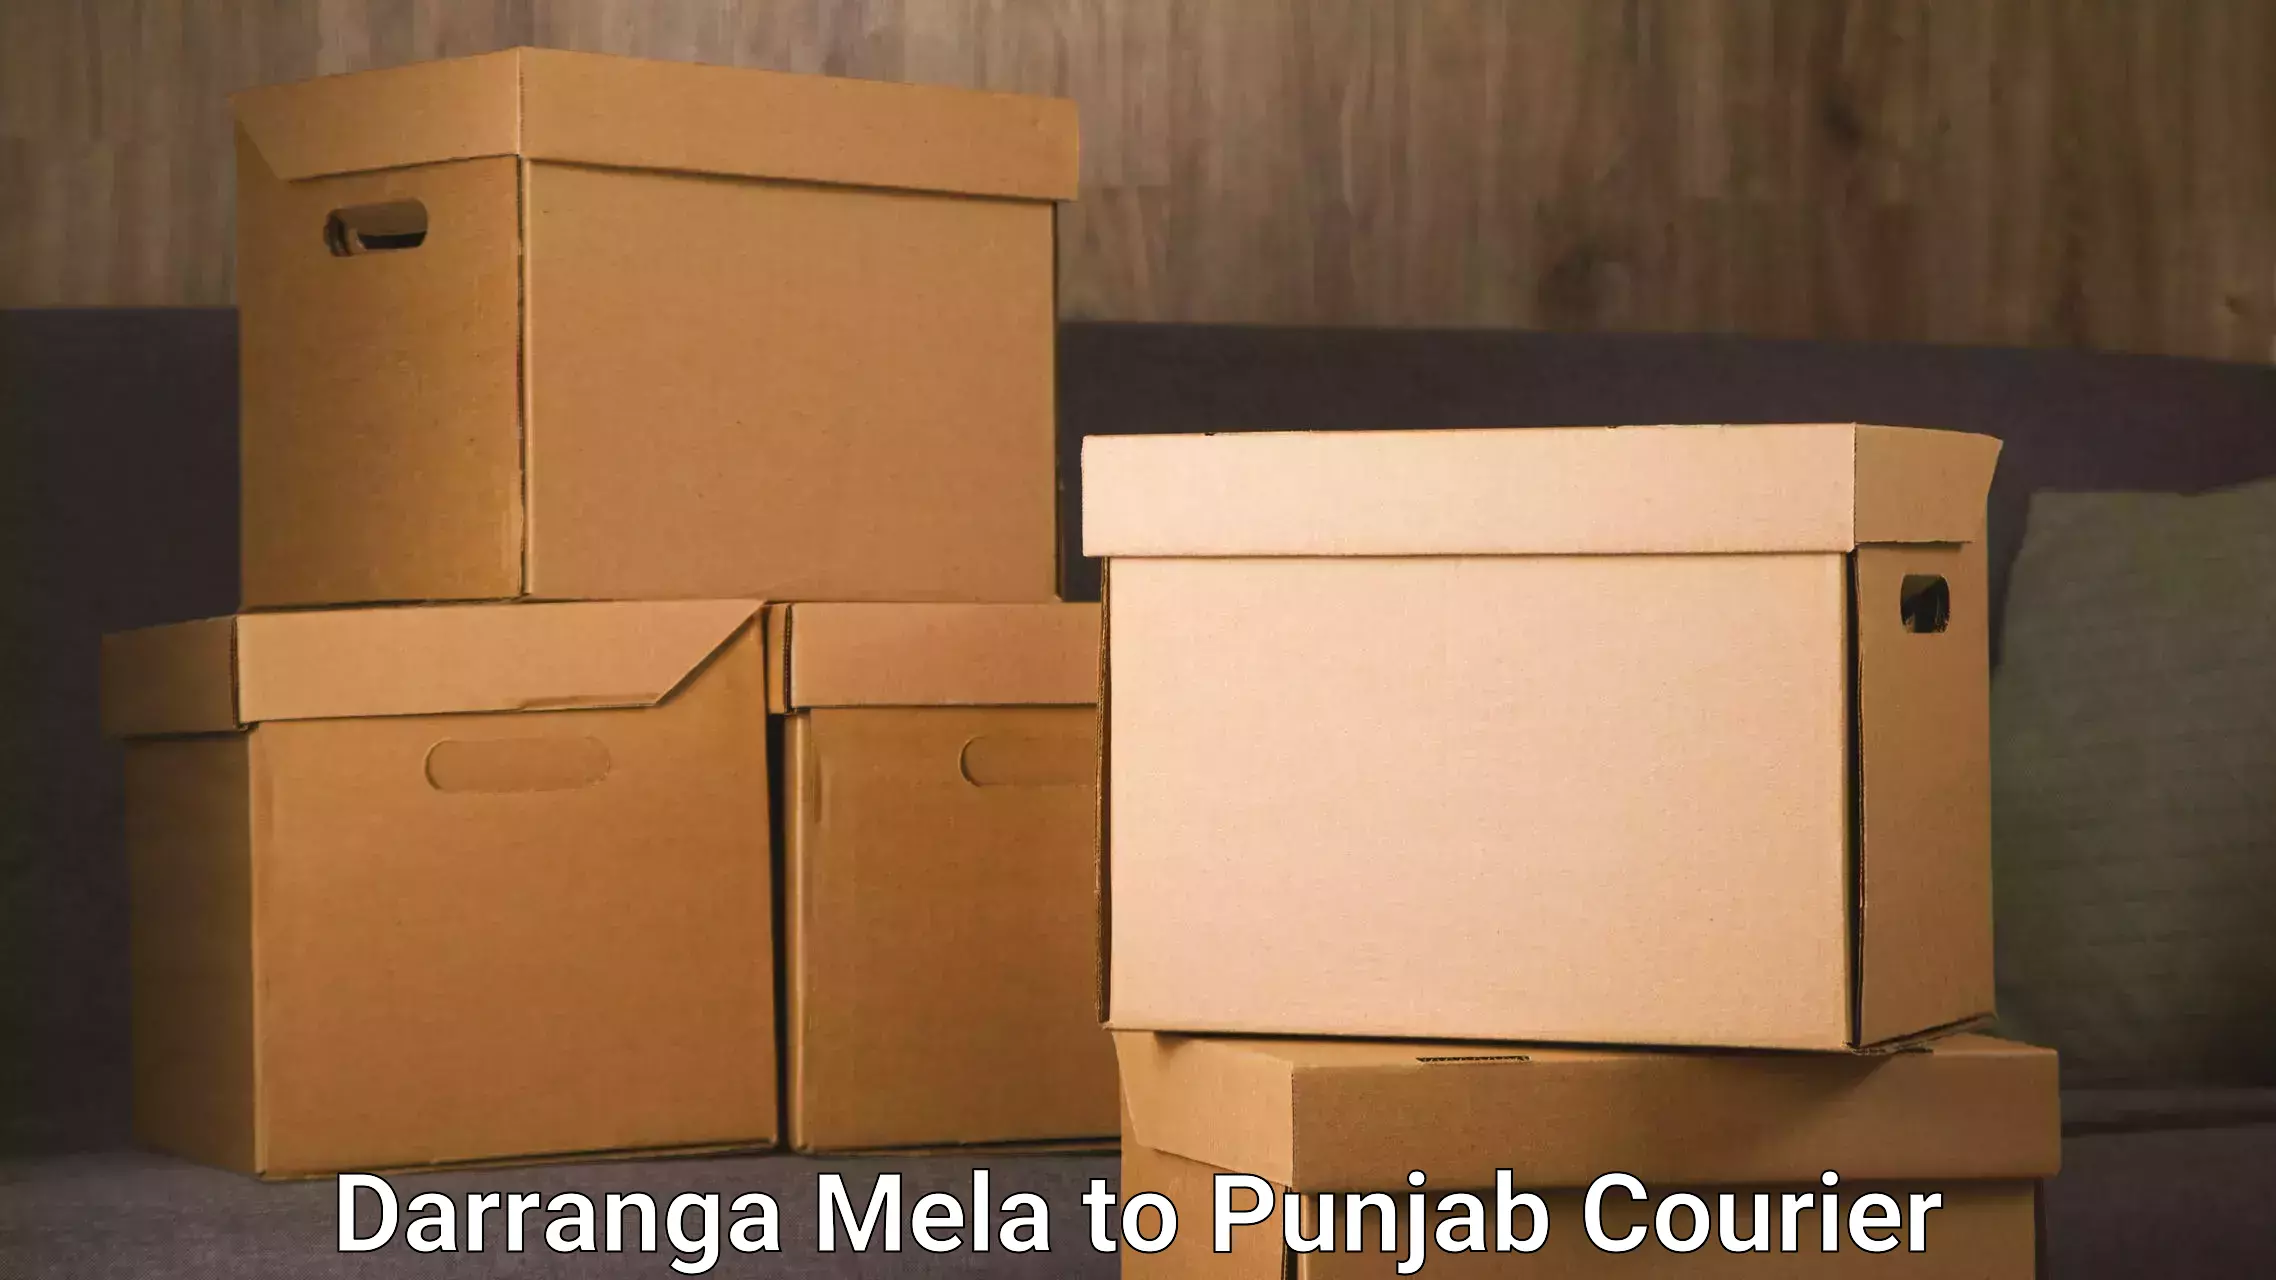 Reliable delivery network Darranga Mela to Phillaur